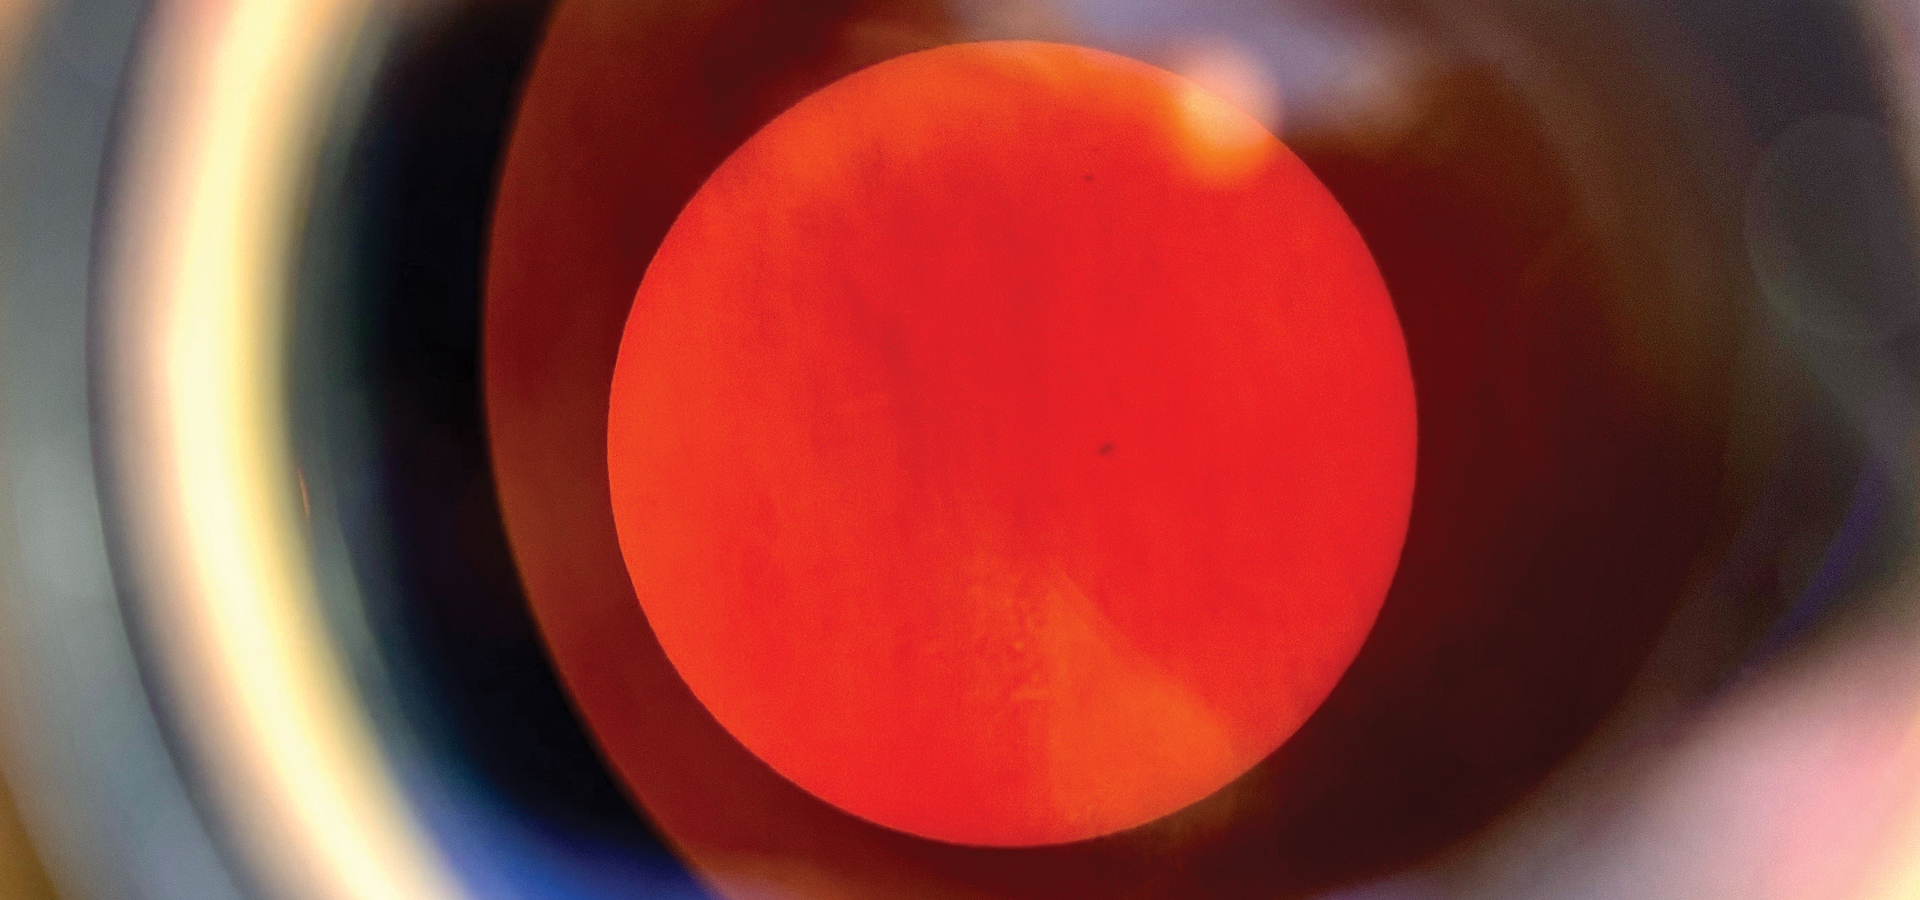 Solar eclipse through telescope